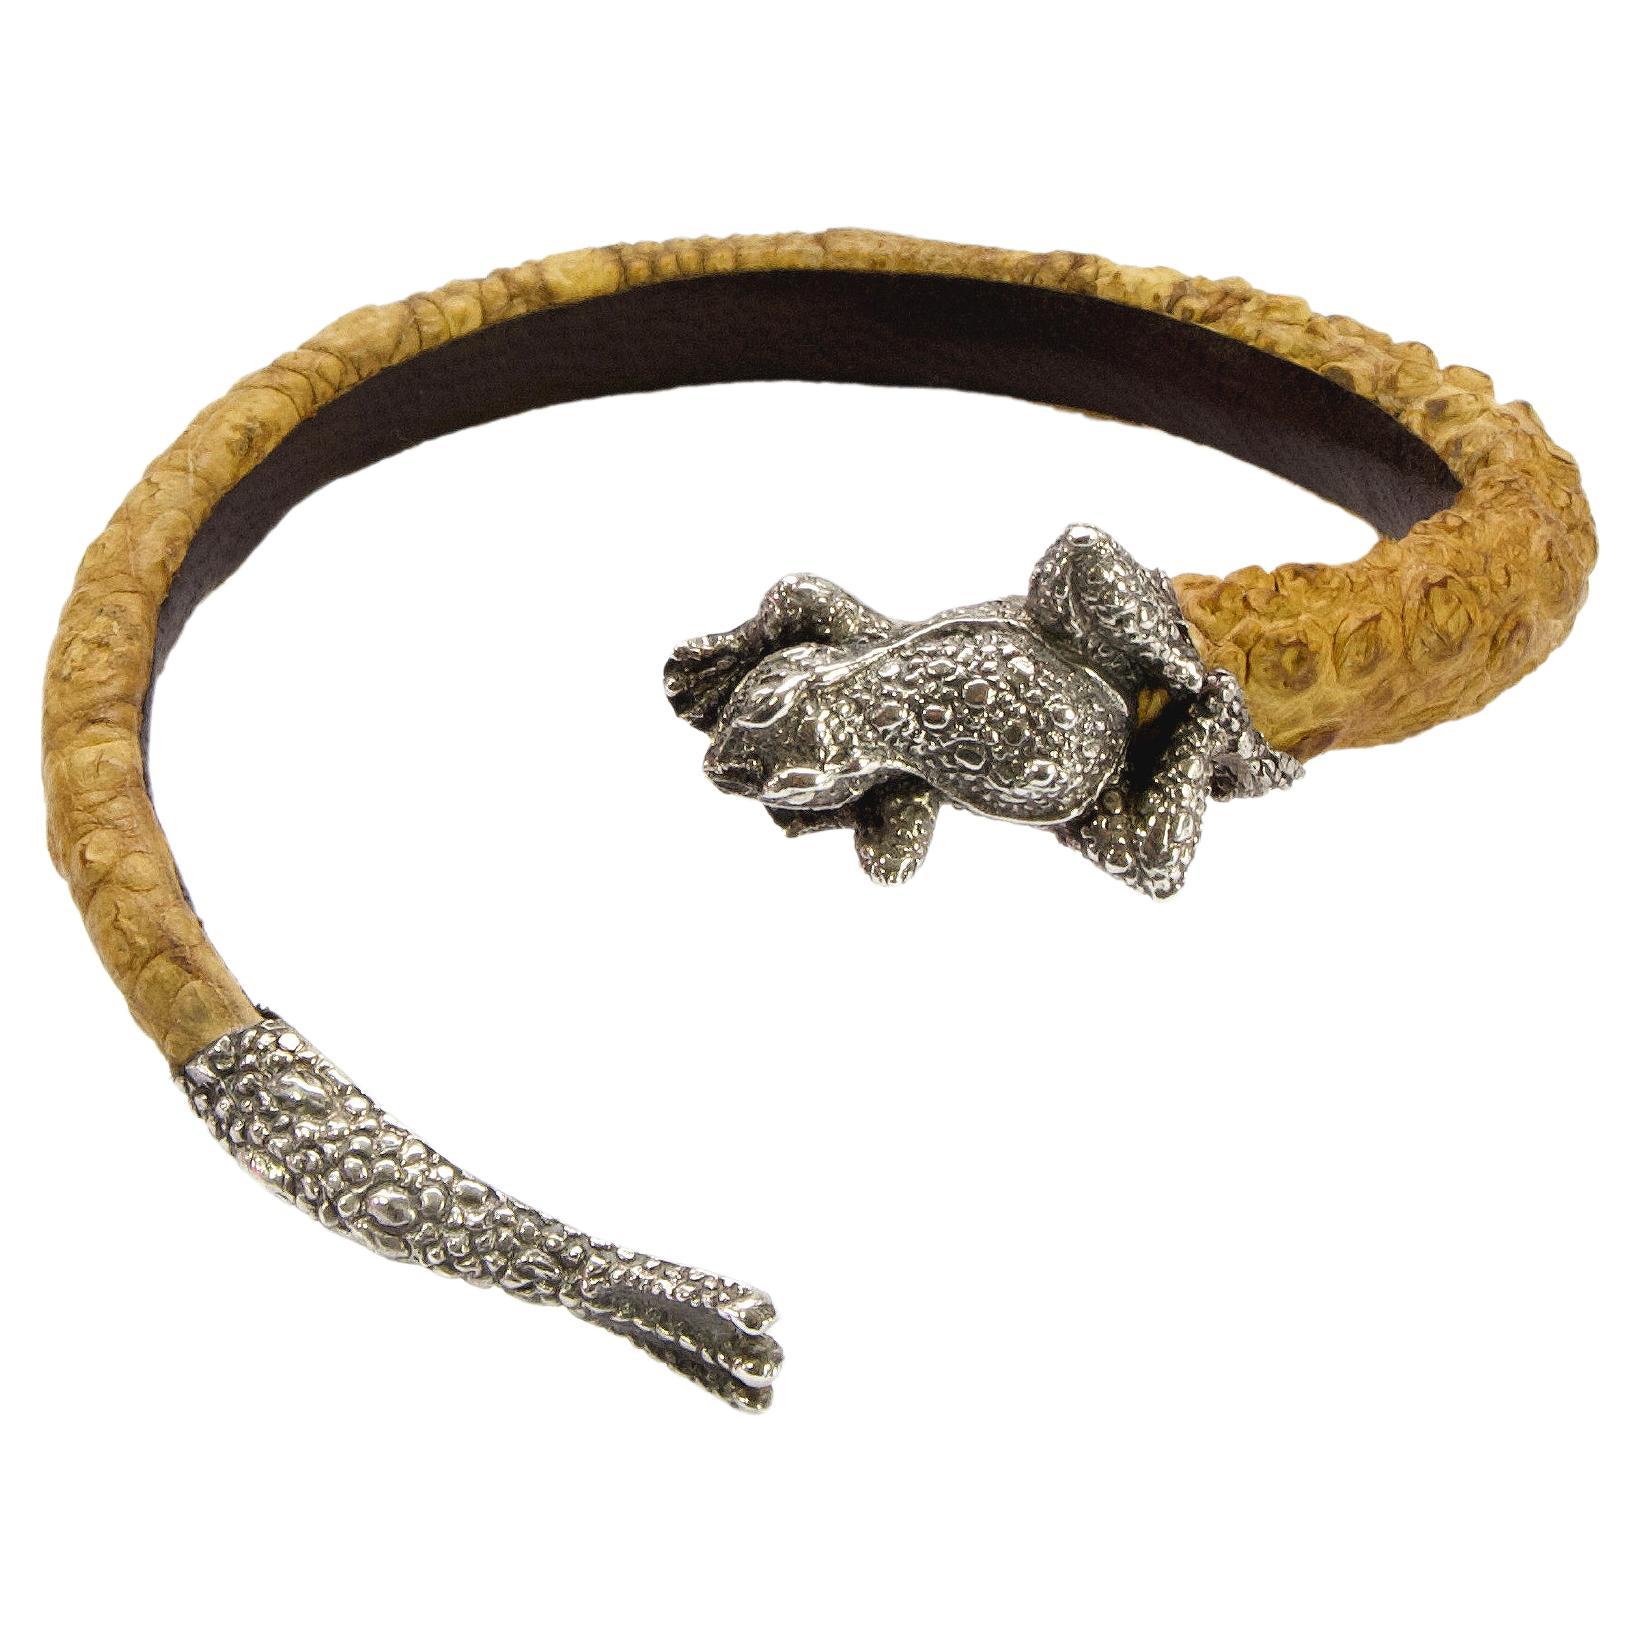 Lou Guerin Bracelet - Silver Frog Body Detail + Leather Main Body For Sale